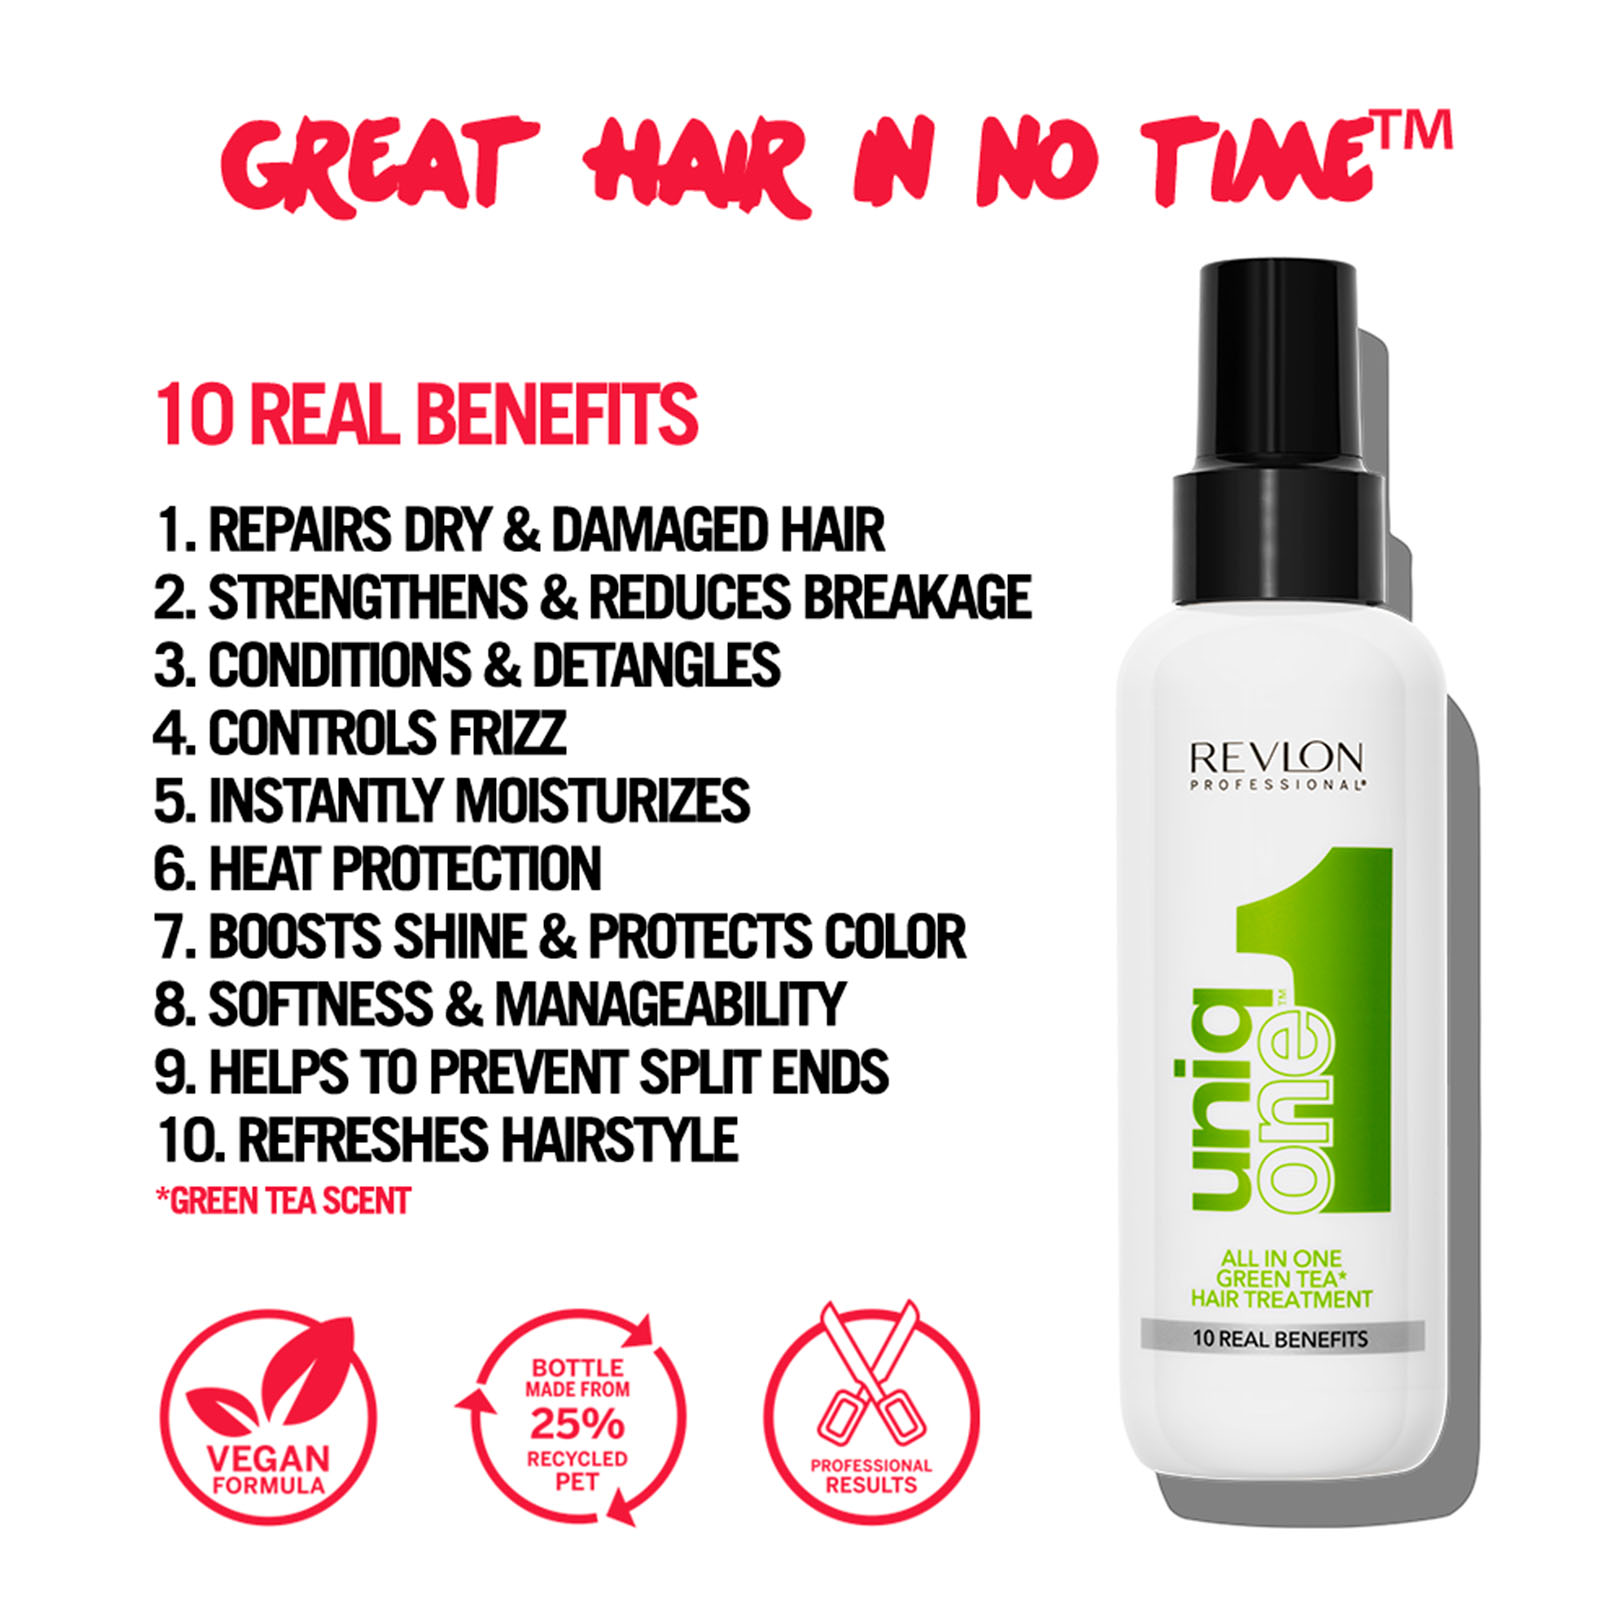 UniqOne™ Hair Treatment Green Tea Fragrance - Revlon Professional